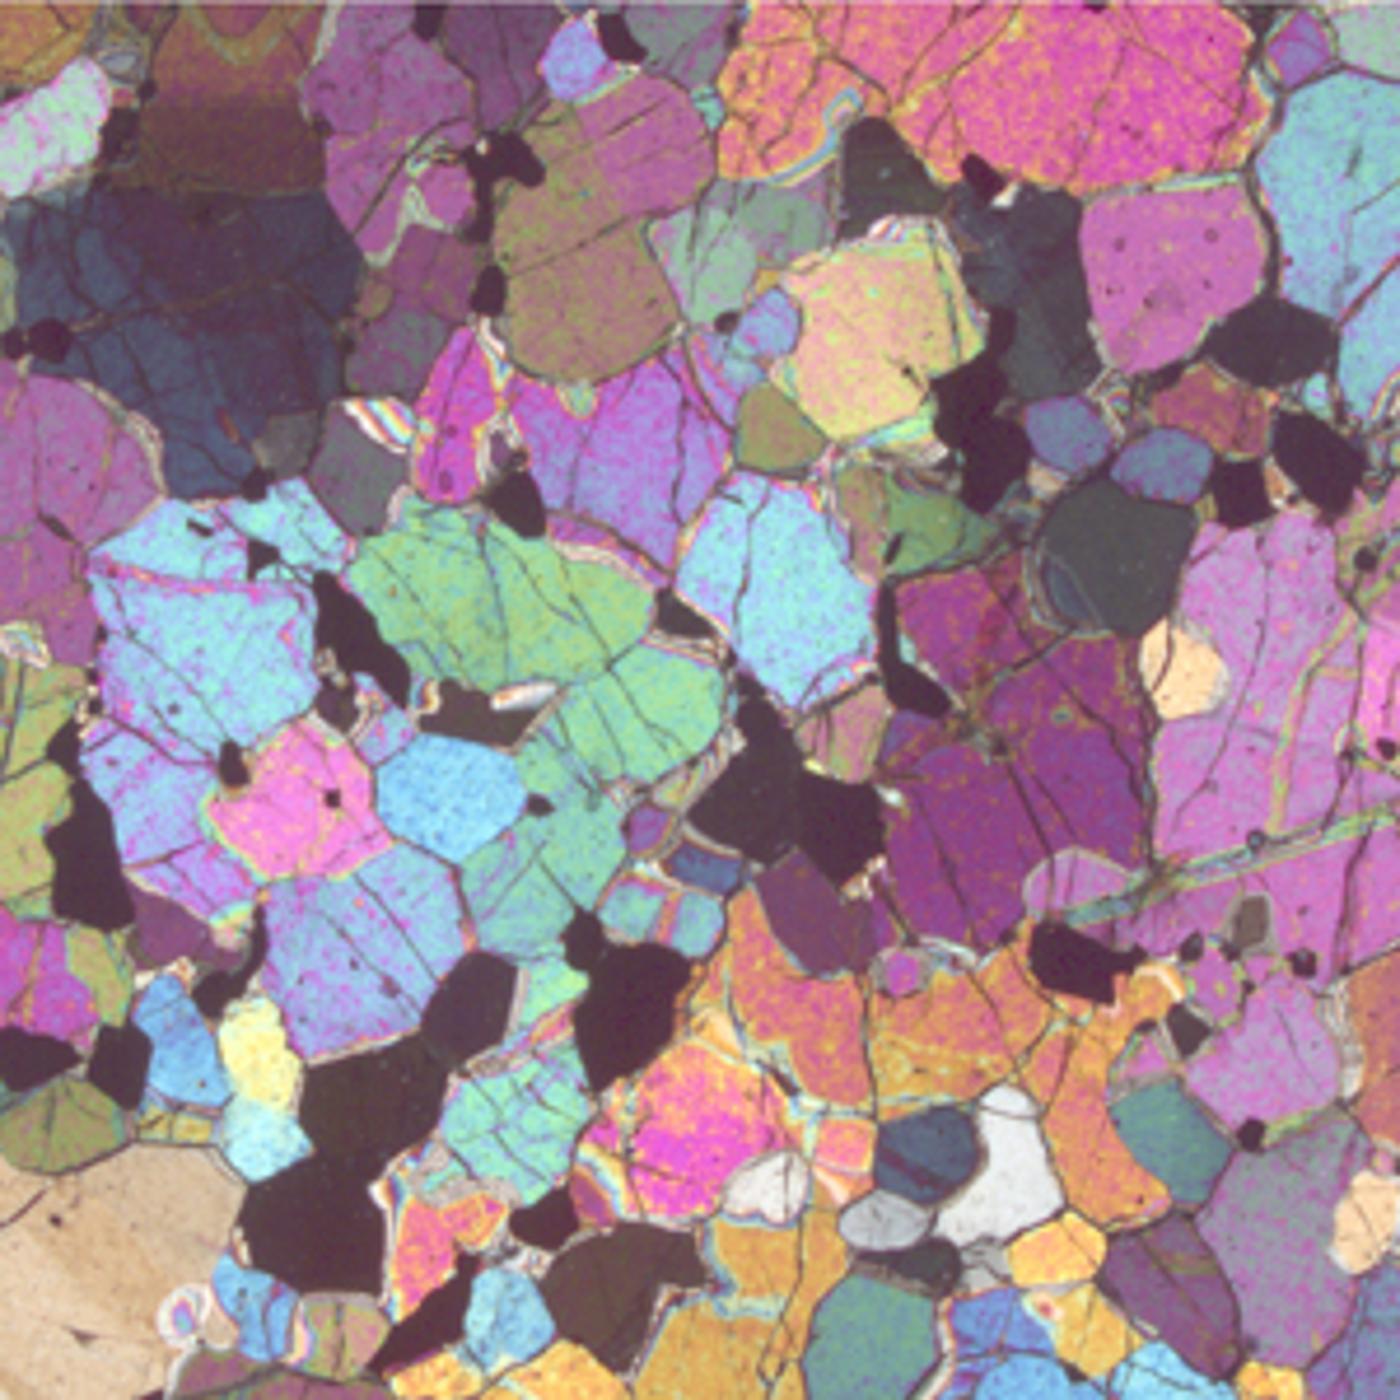 Magma Arta: rocks under the microscope